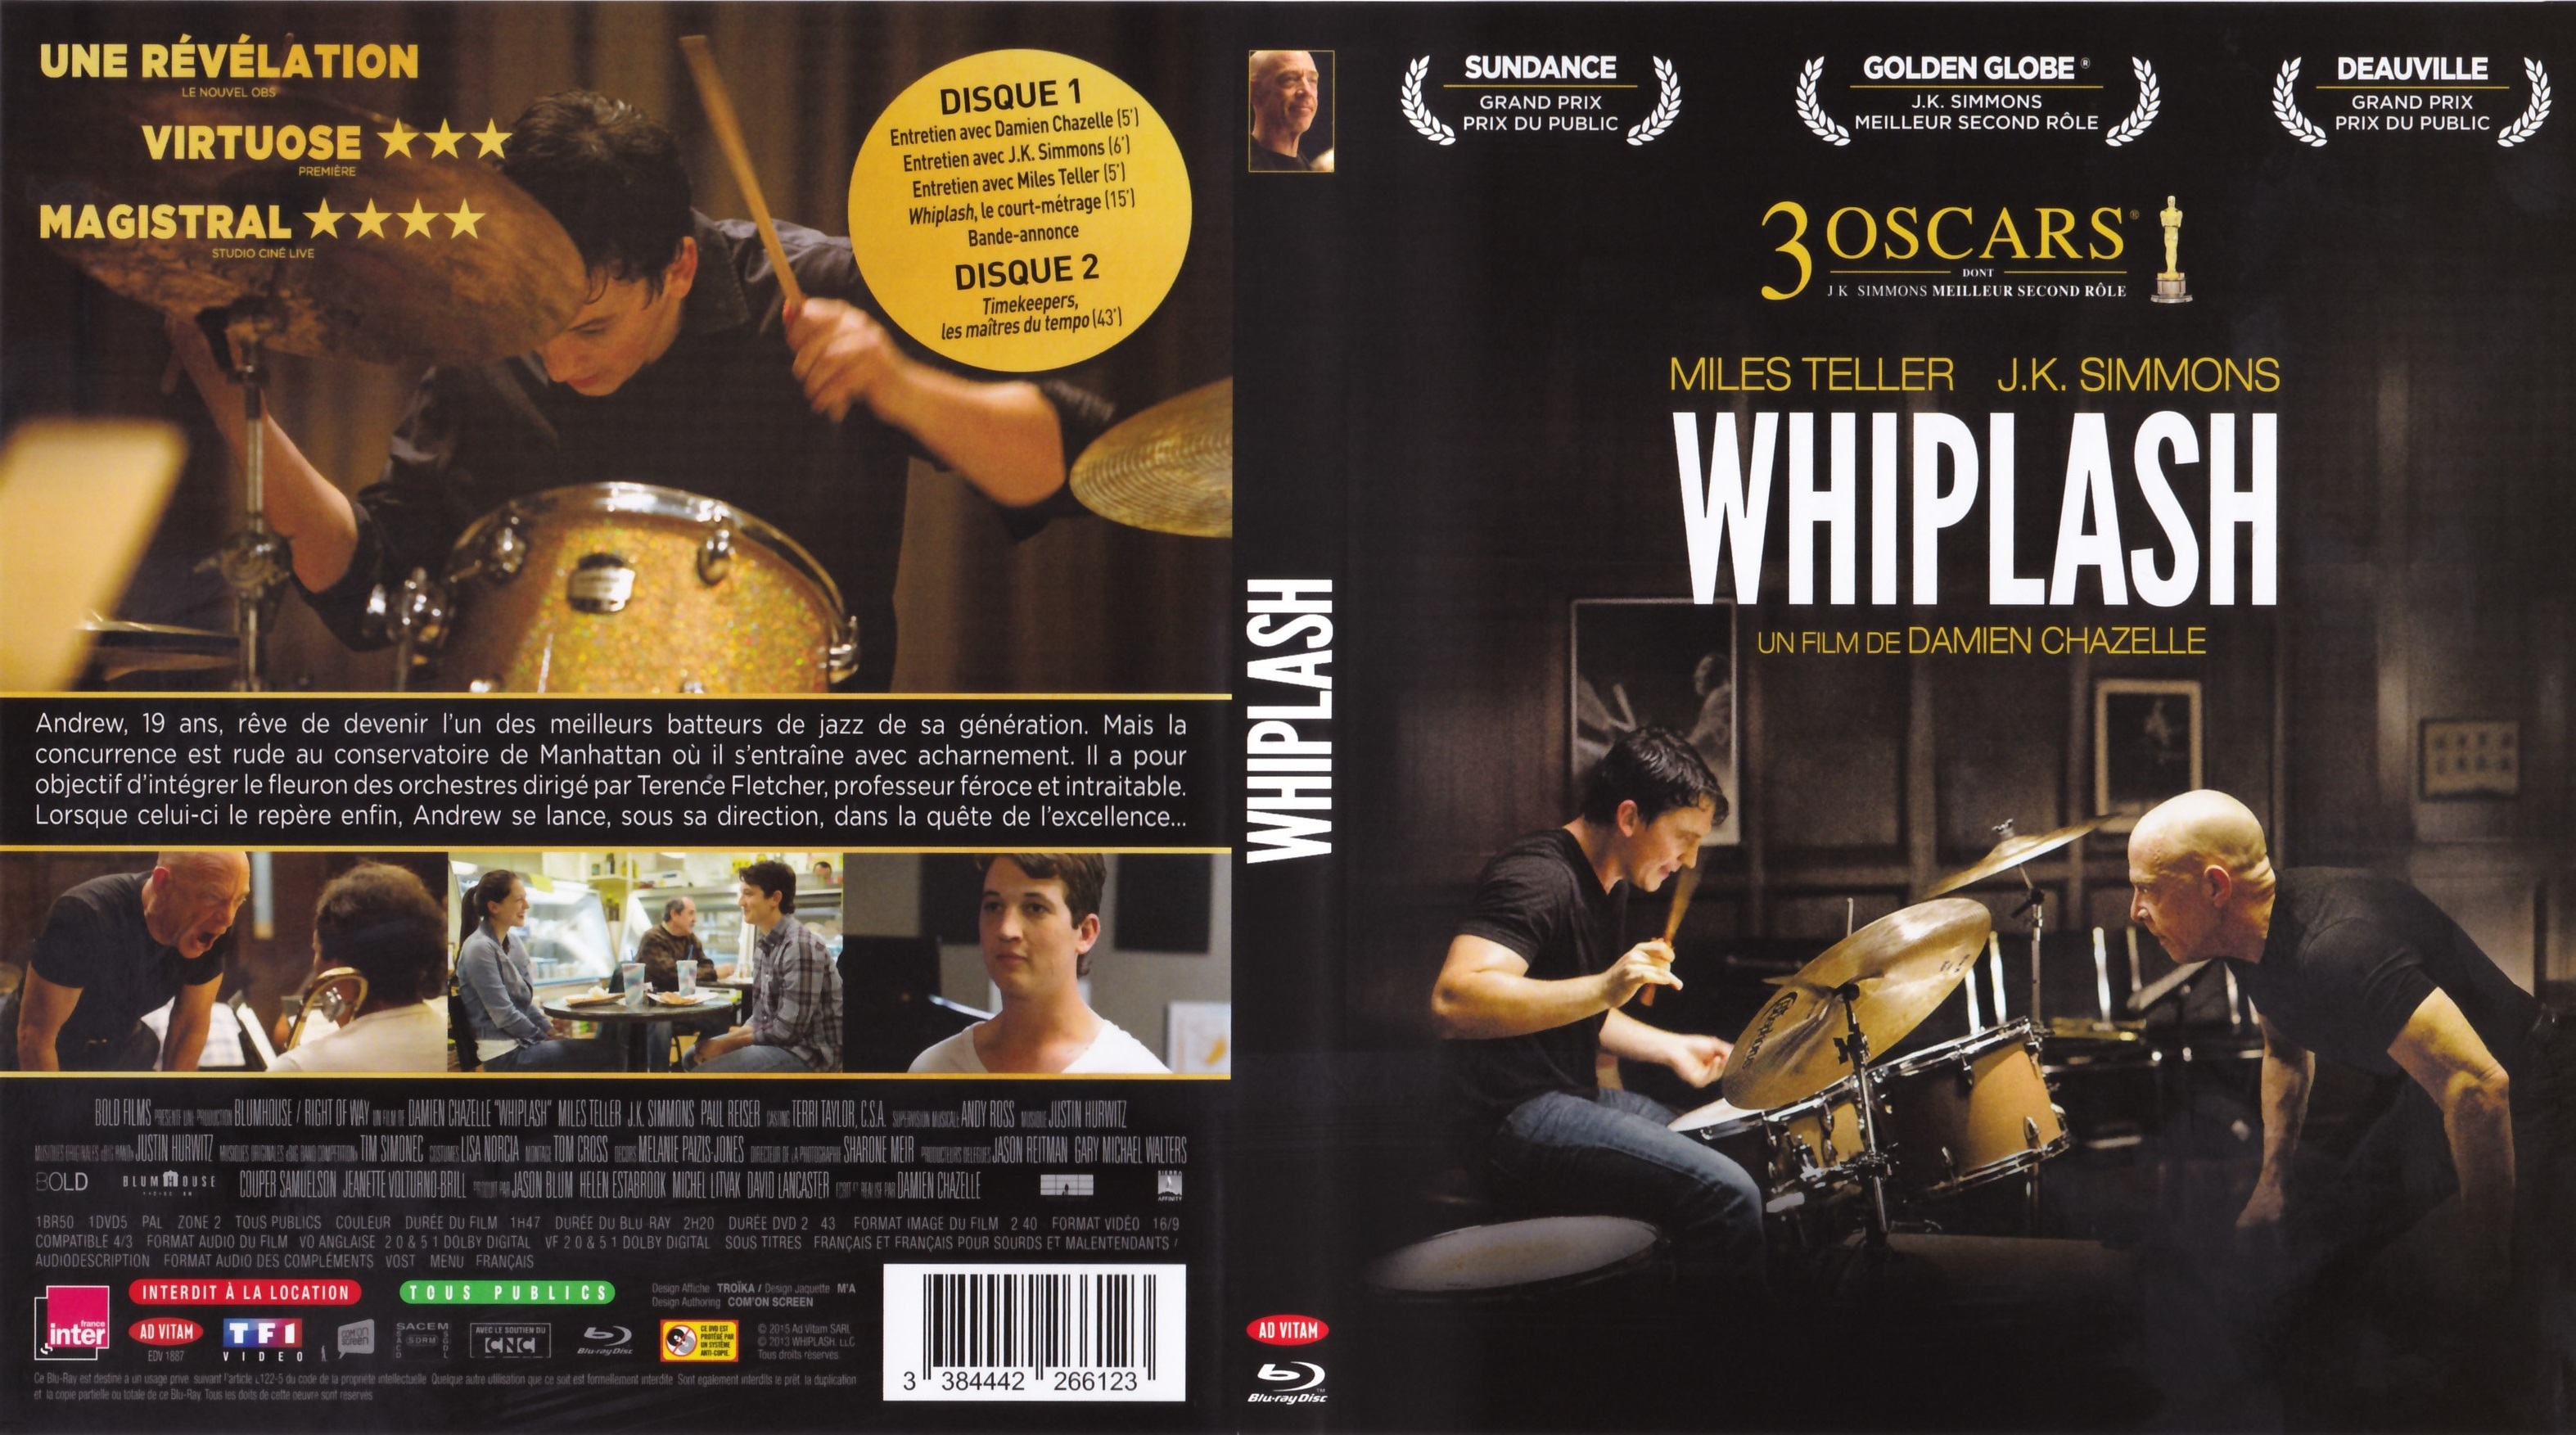 Jaquette DVD Whiplash (BLU-RAY) v2